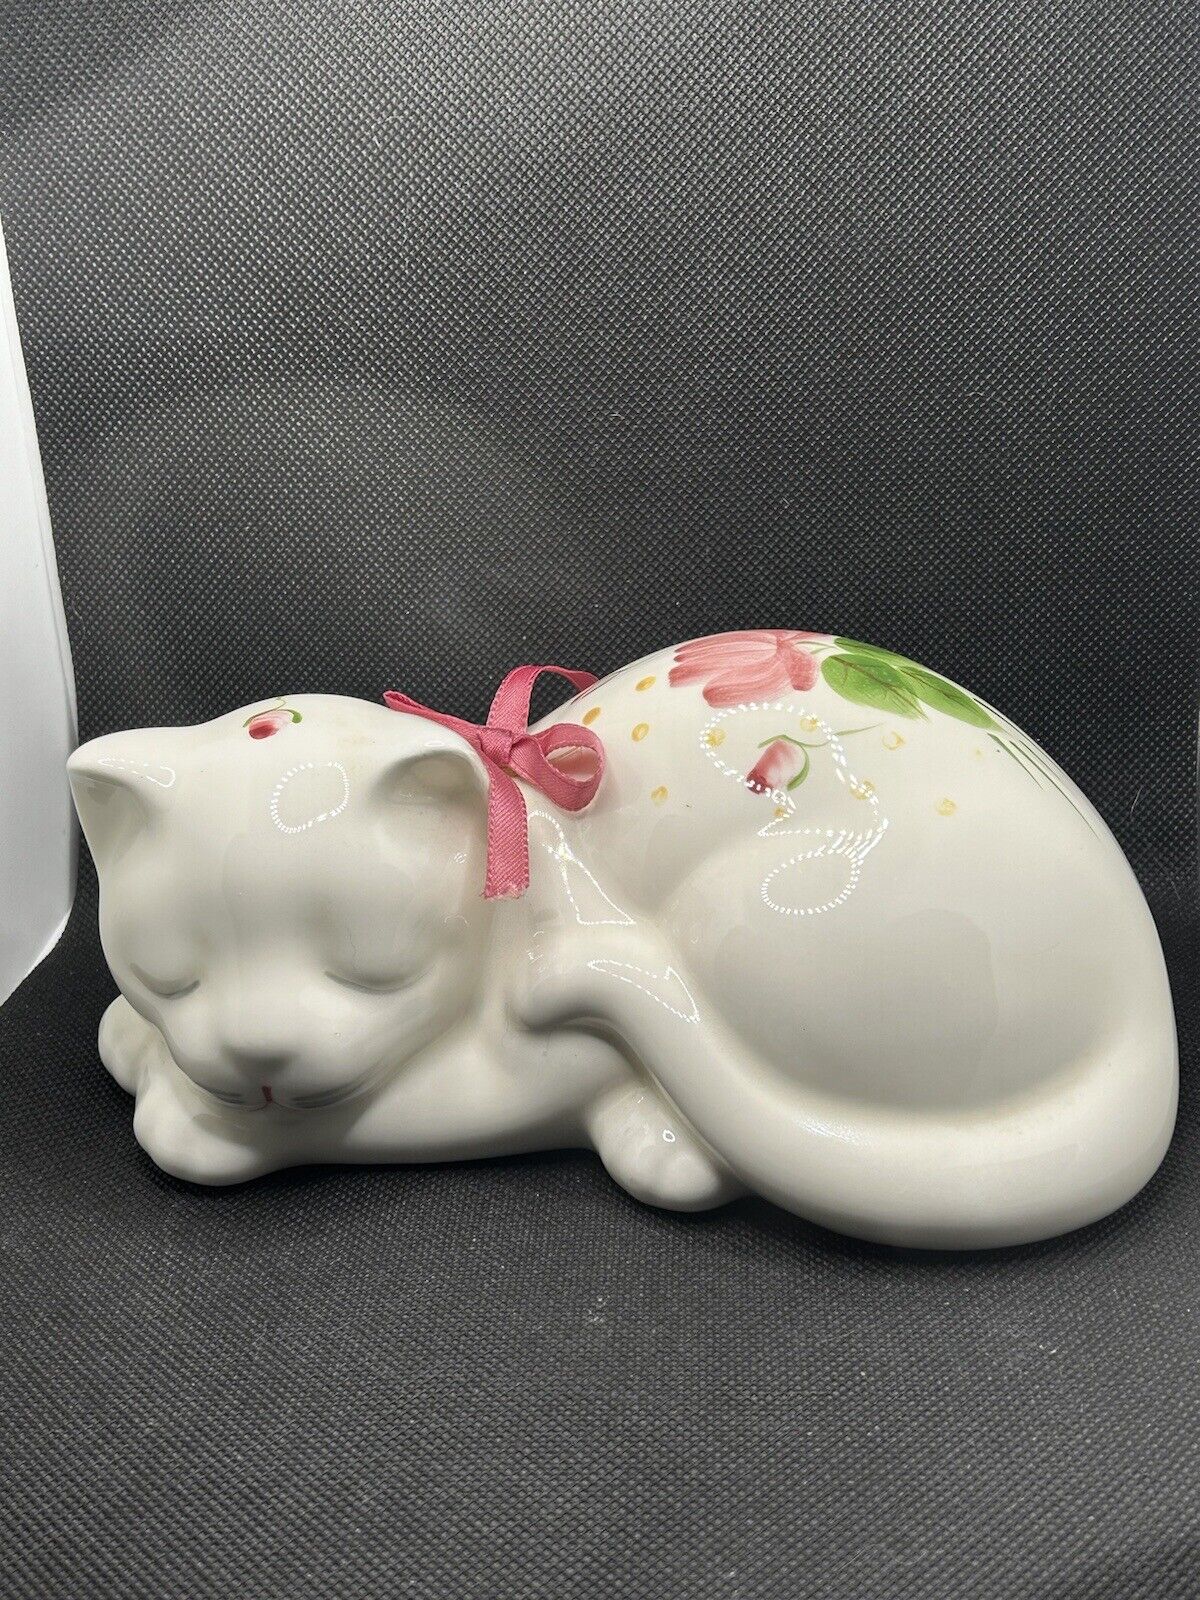 Vintage Lasting Products USA Ceramic Sleeping Cat Figurine w/ Hand Painted Roses